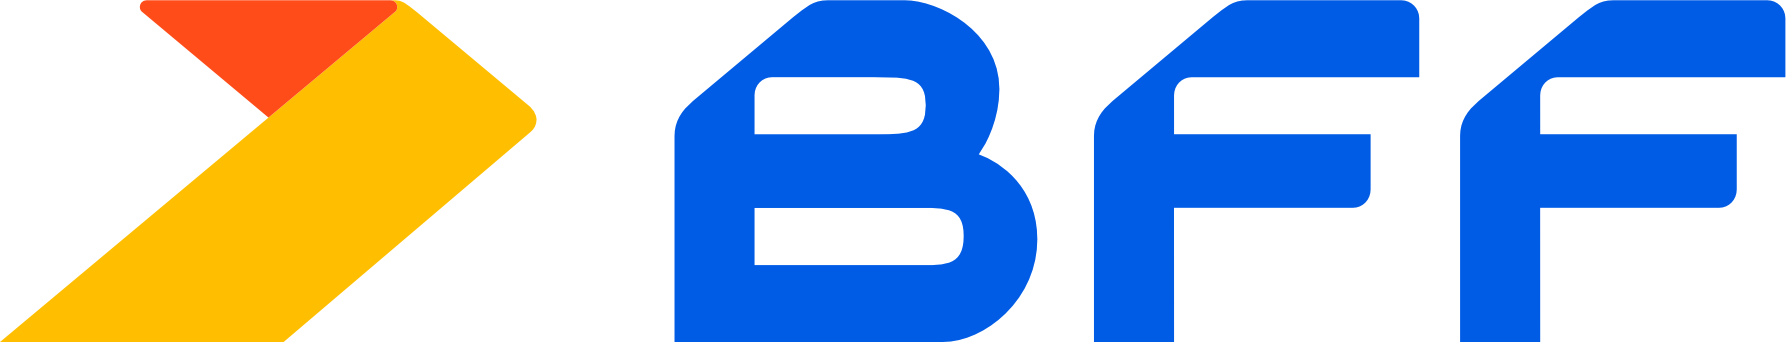 Logo exposant BFF BANK